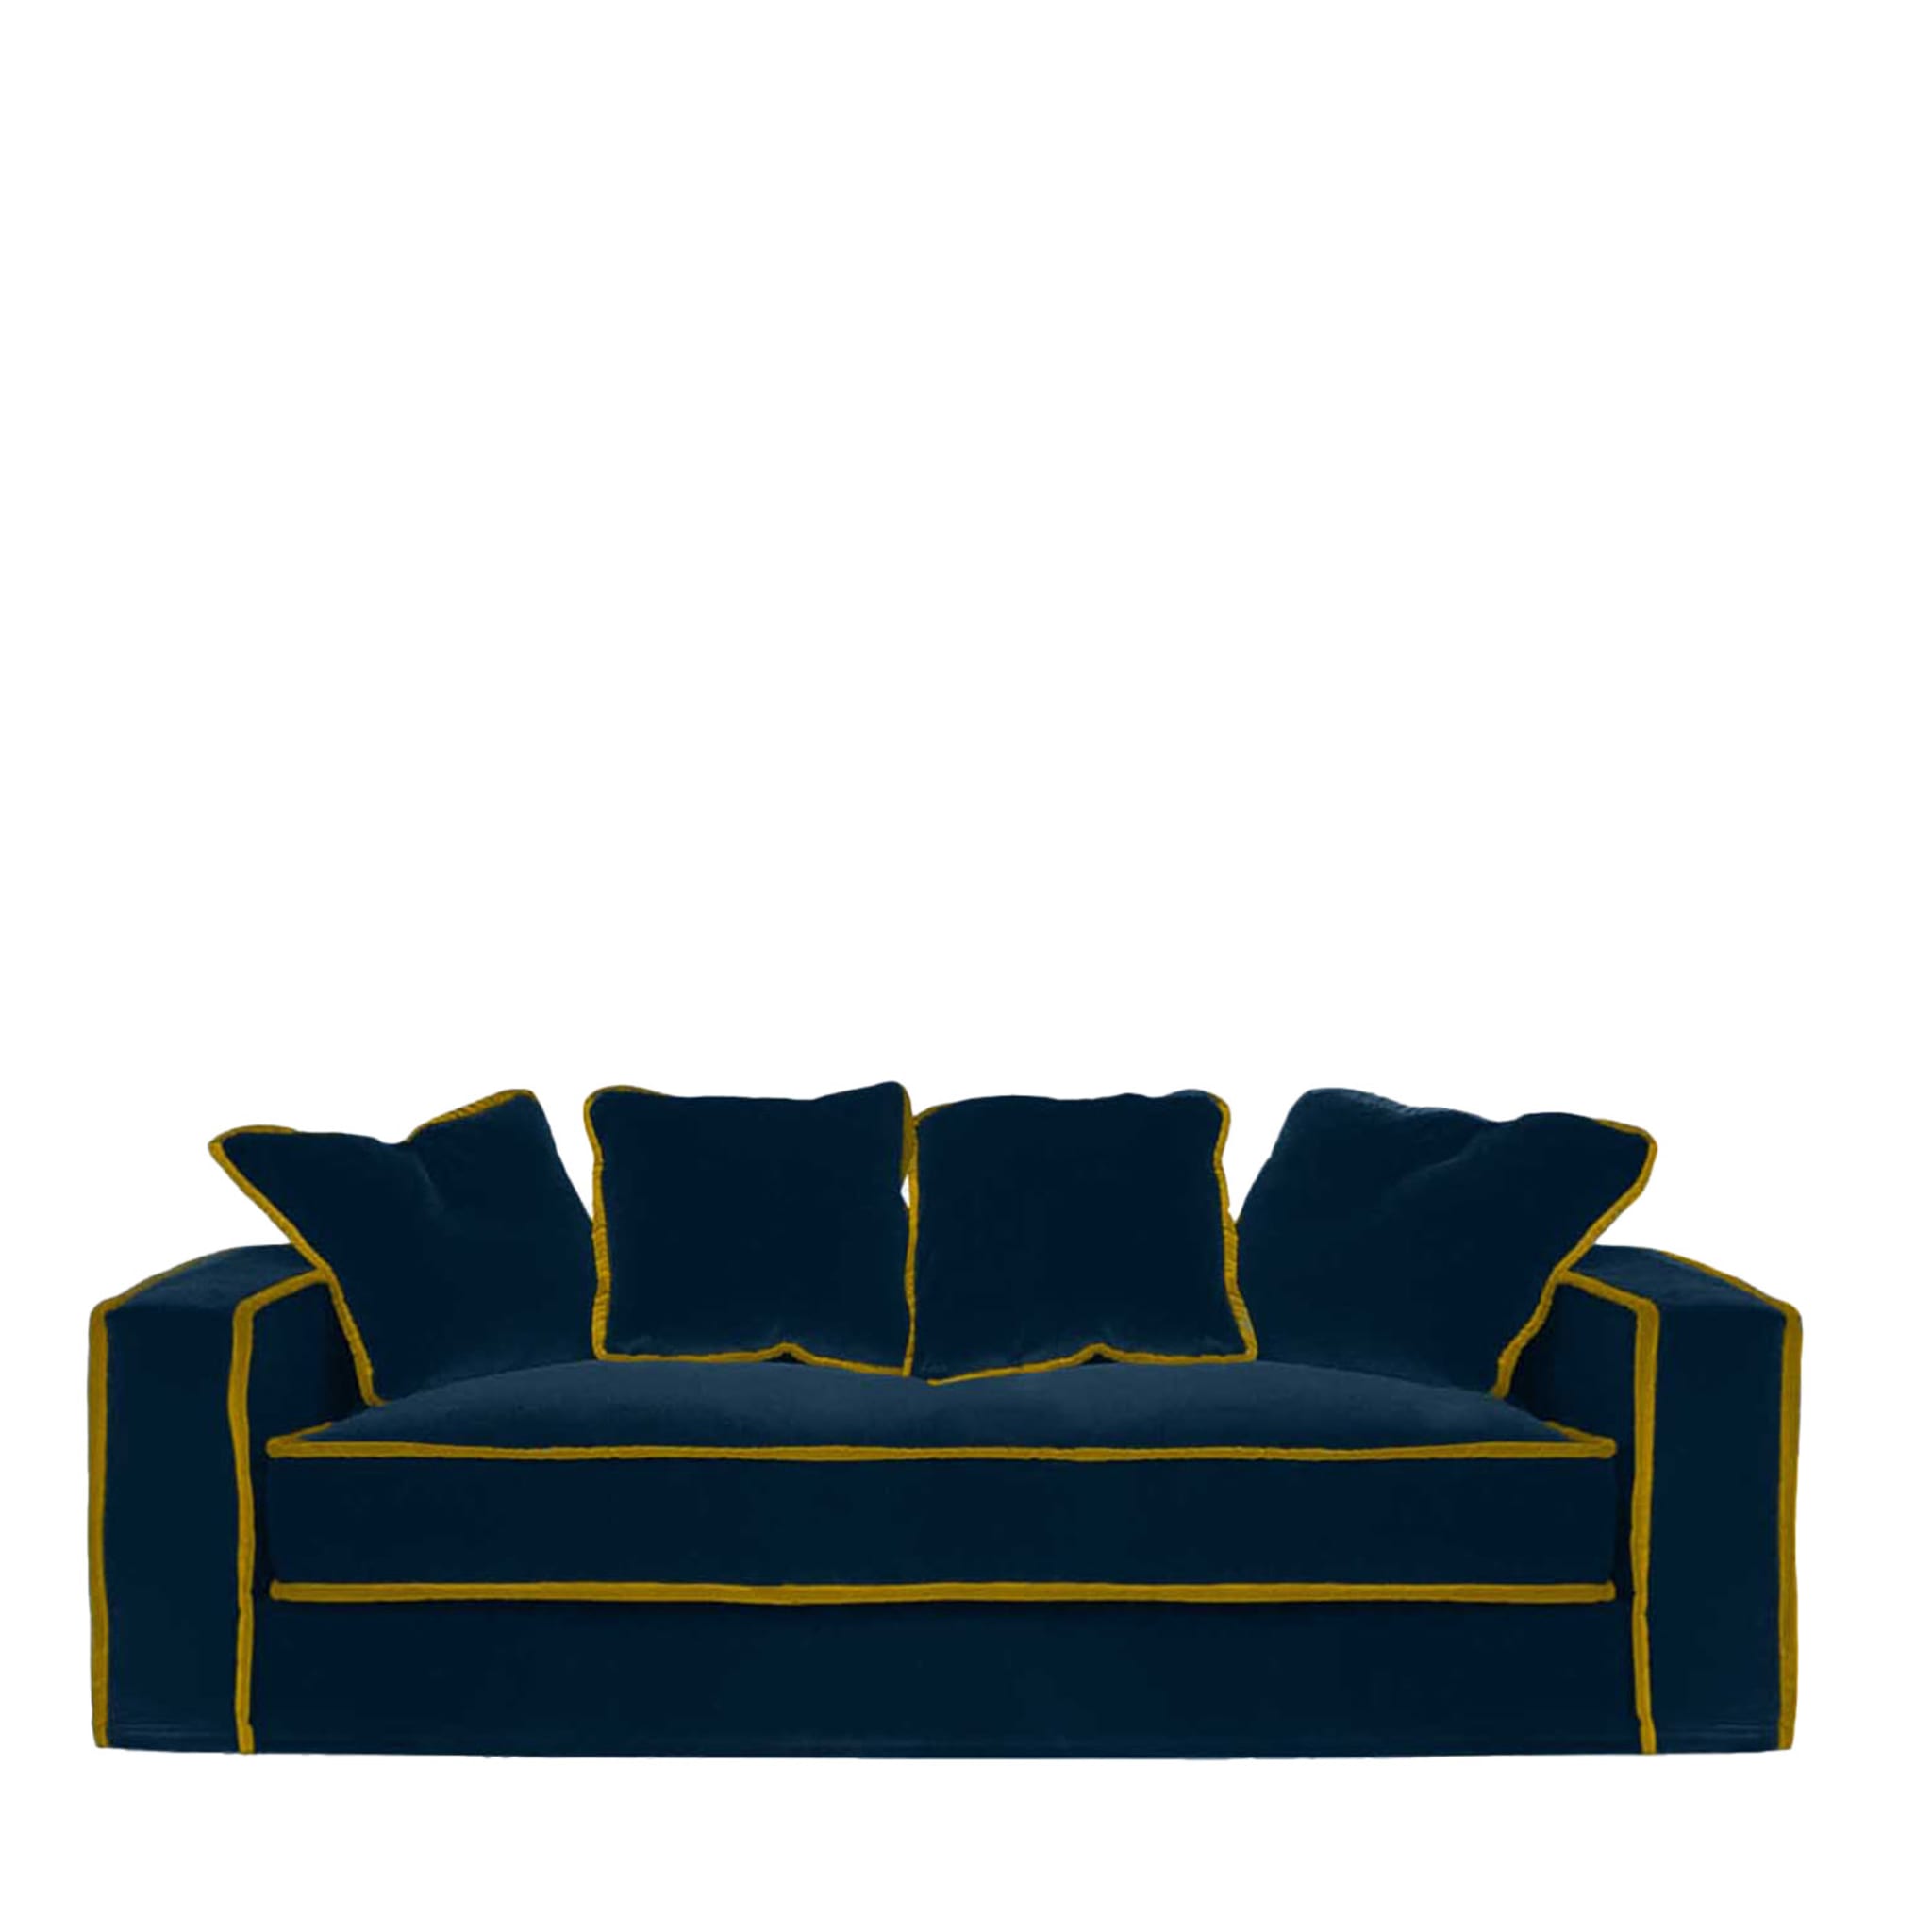 Rafaella Midnight Blue & Gold Velvet 2 Seater Sofa - Main view